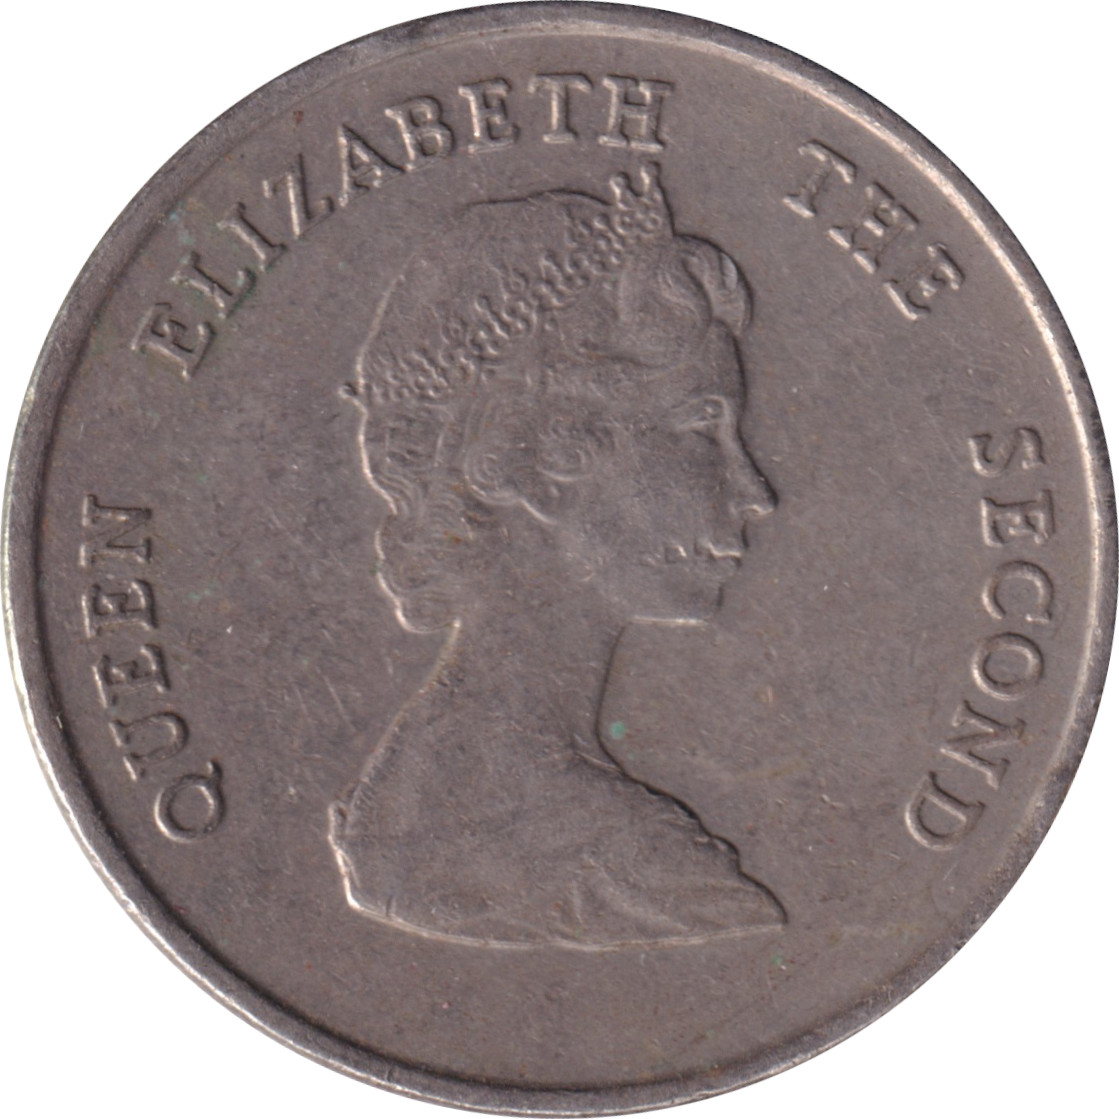 25 cents - Elizabeth II - Mature bust